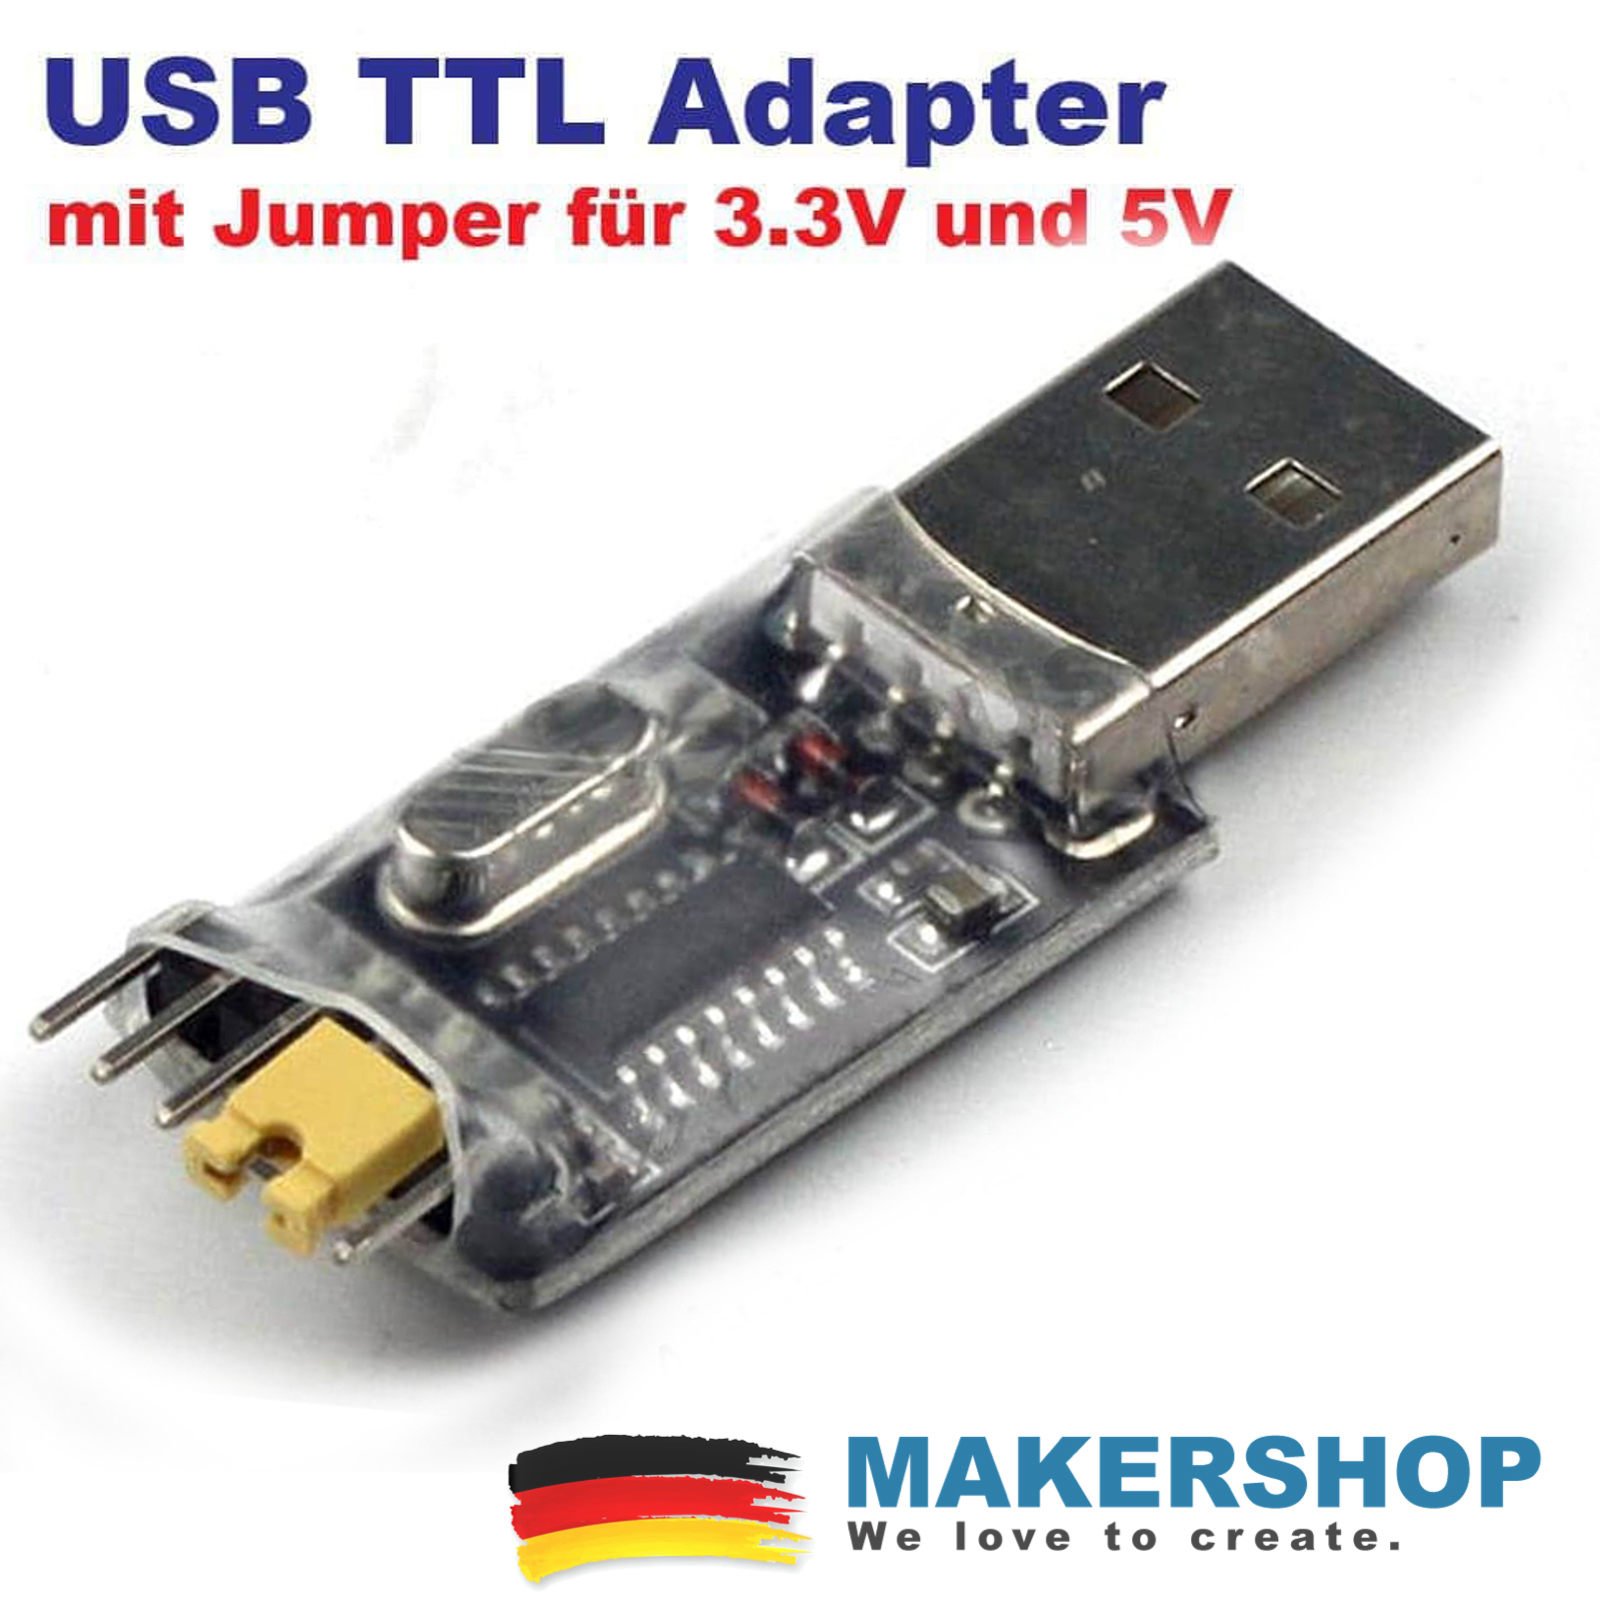 https://www.makershop.de/wp-content/uploads/2016/01/usb-ttl-adapter-1.jpg